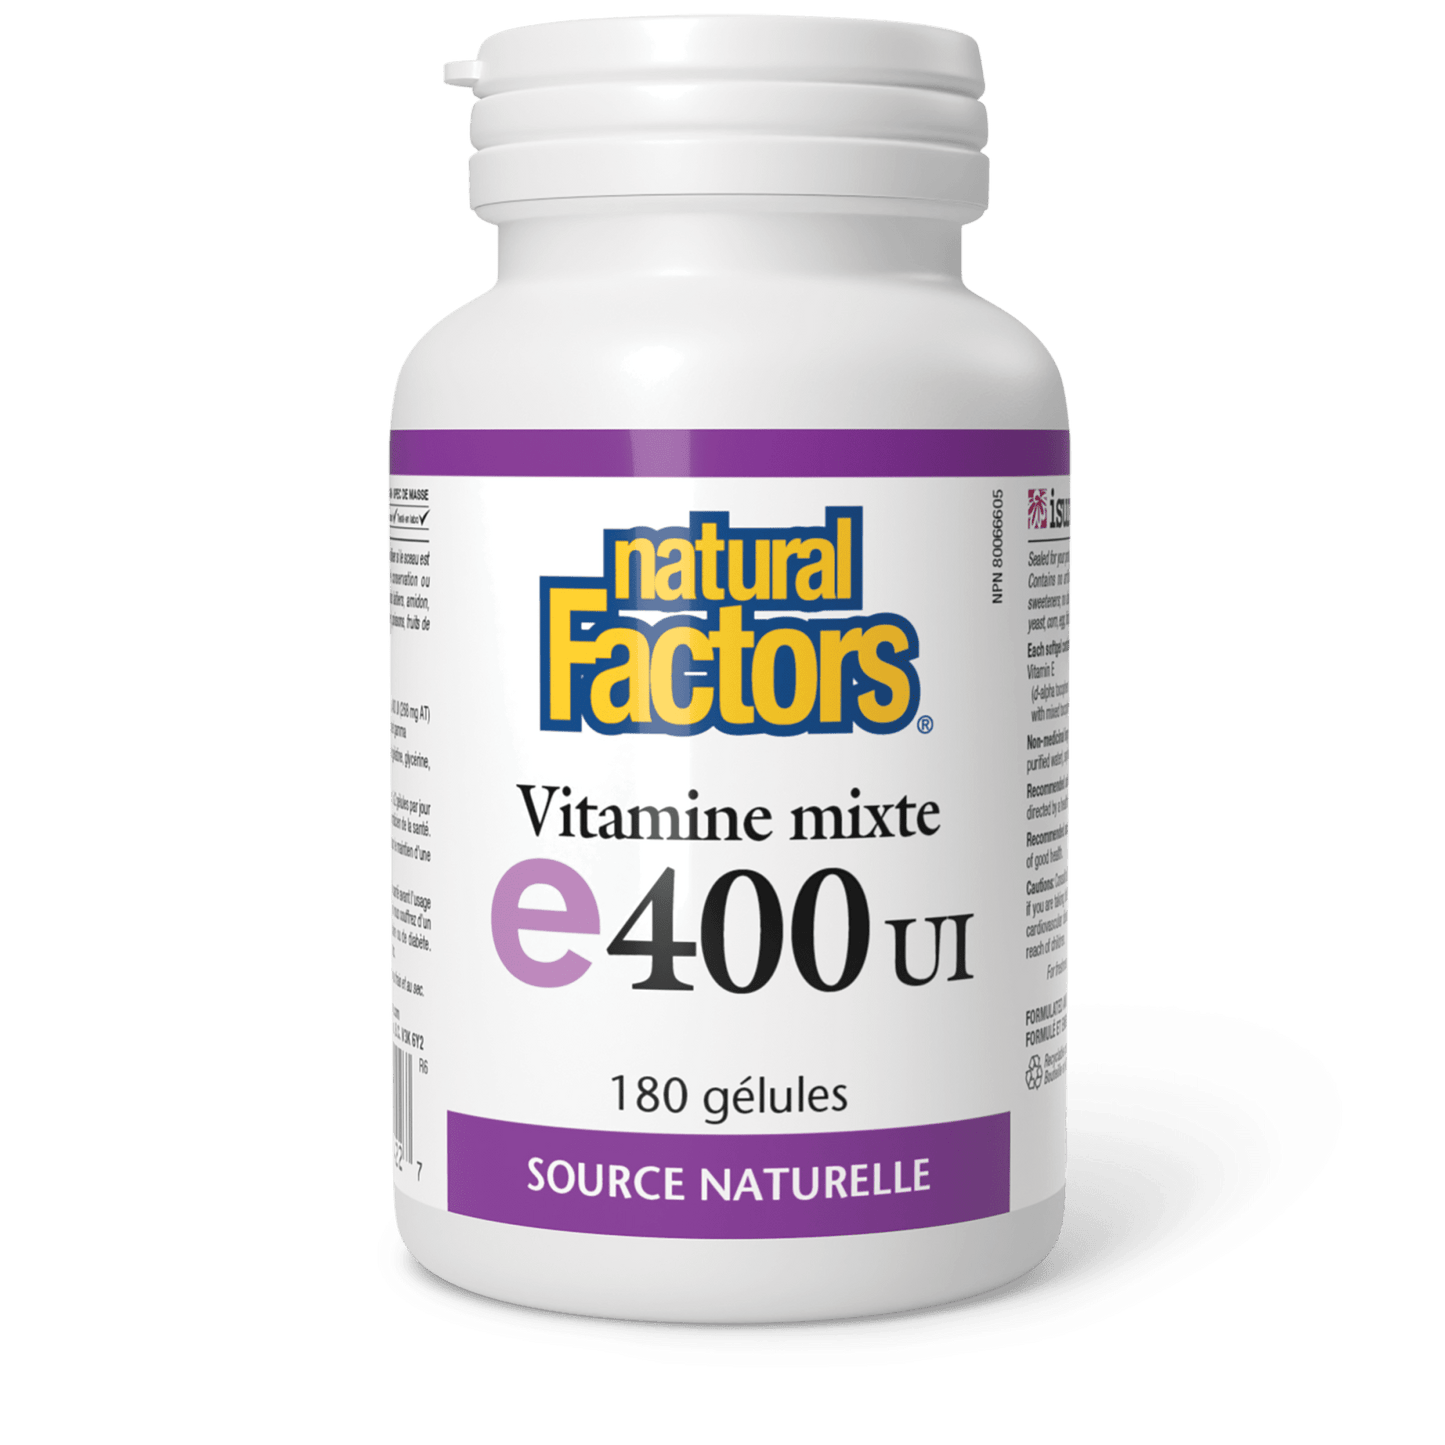 Vitamine mixte E 400 UI, source naturelle, Natural Factors|v|image|1422